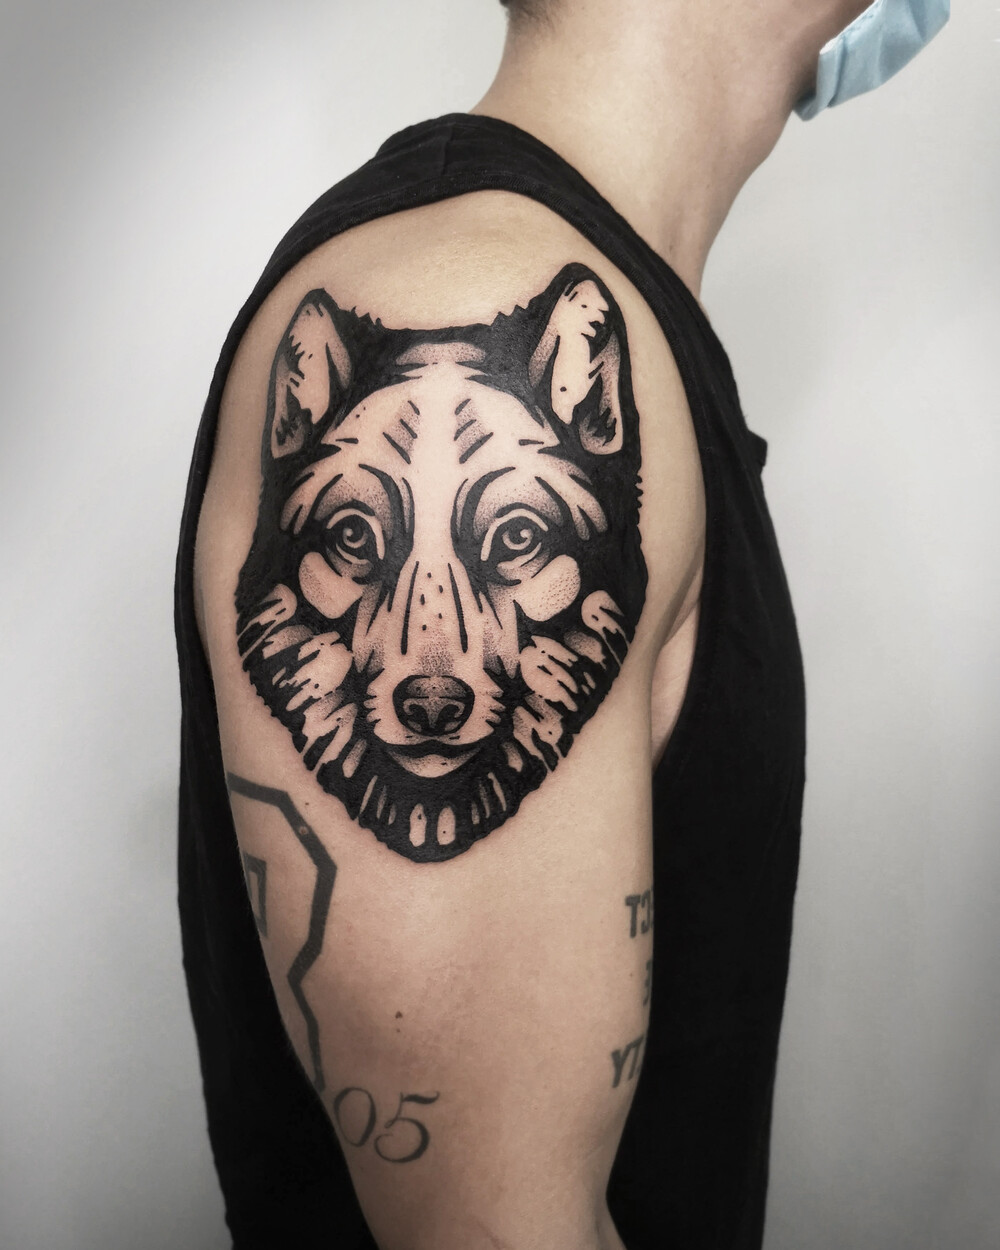 Wolf wolfhead tattoo in Blackwork Holzschnitt Linocut style by Christian Eisenhofer - Tattoo Berlin